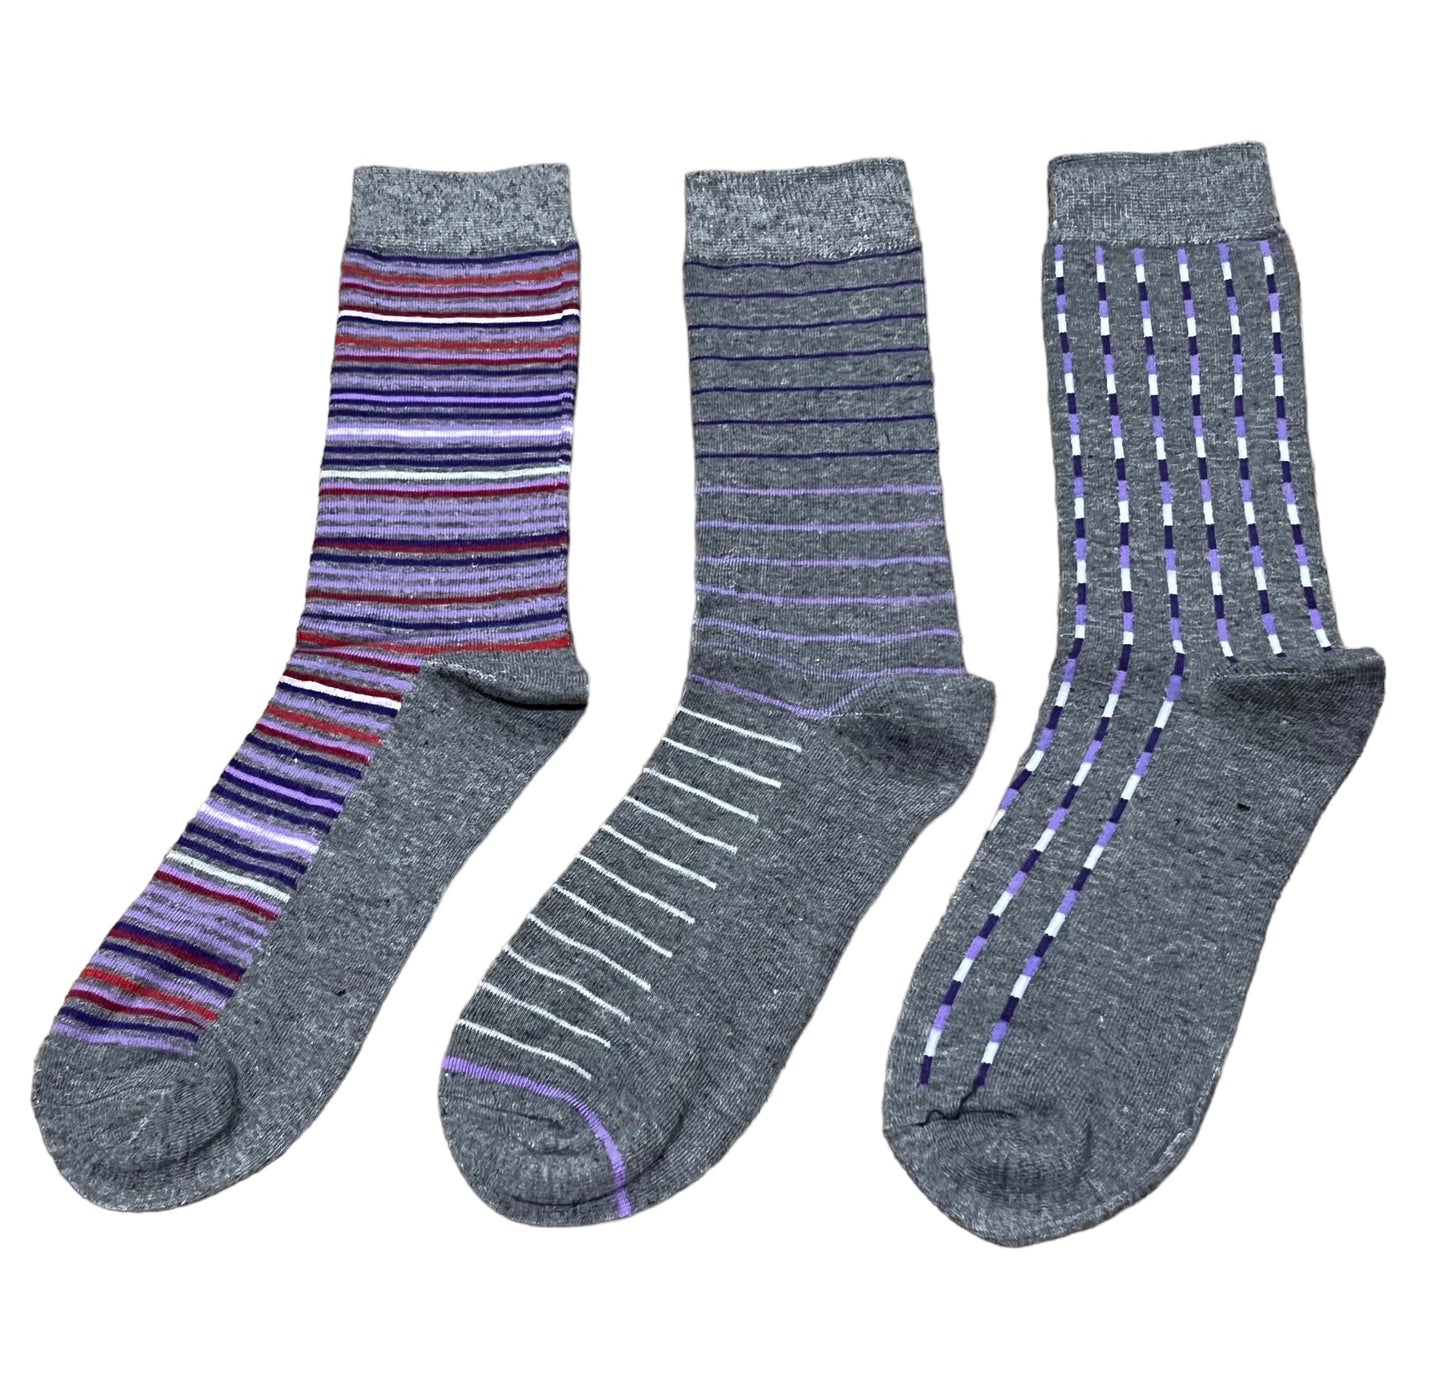 Stripes Assortment Fashion Socks in Grey 3pr Pack